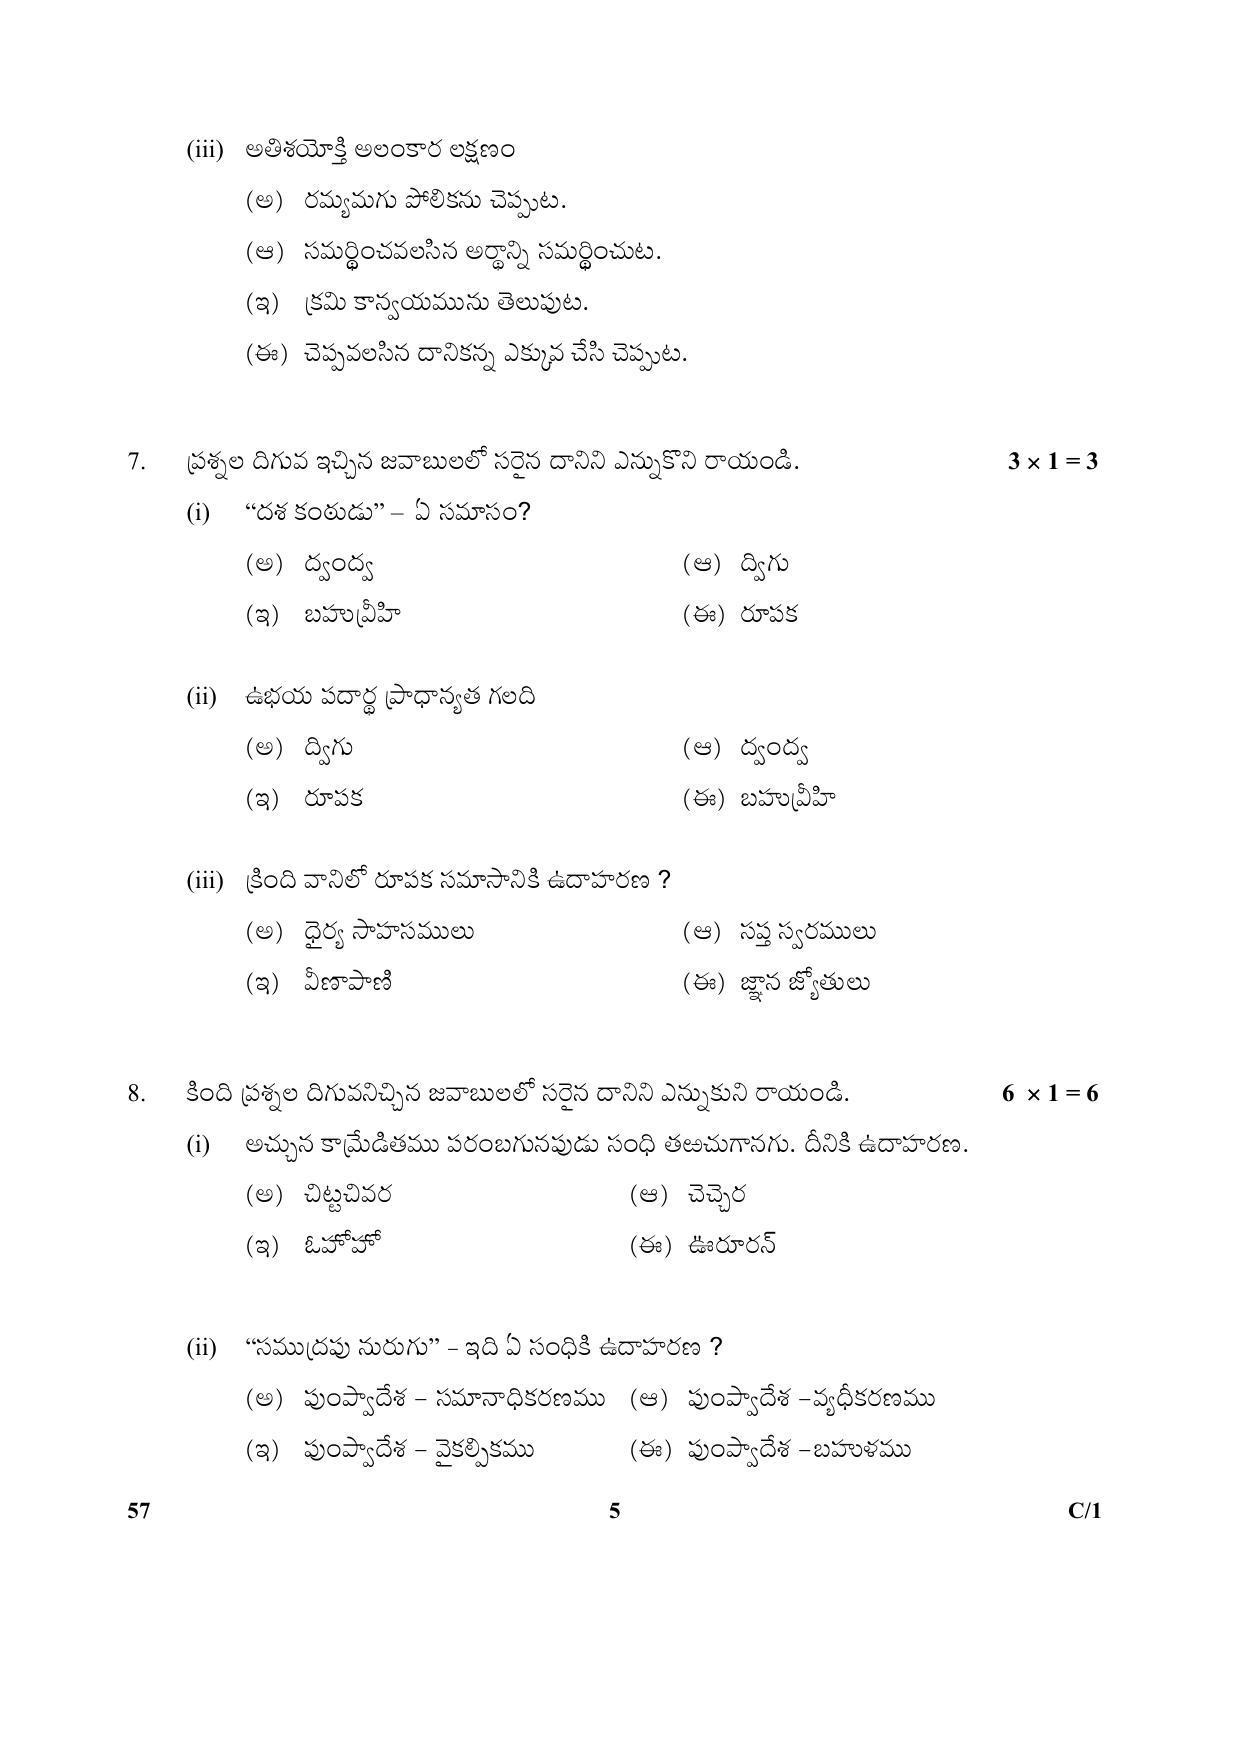 CBSE Class 10 57 (Telugu) 2018 Compartment Question Paper - Page 5